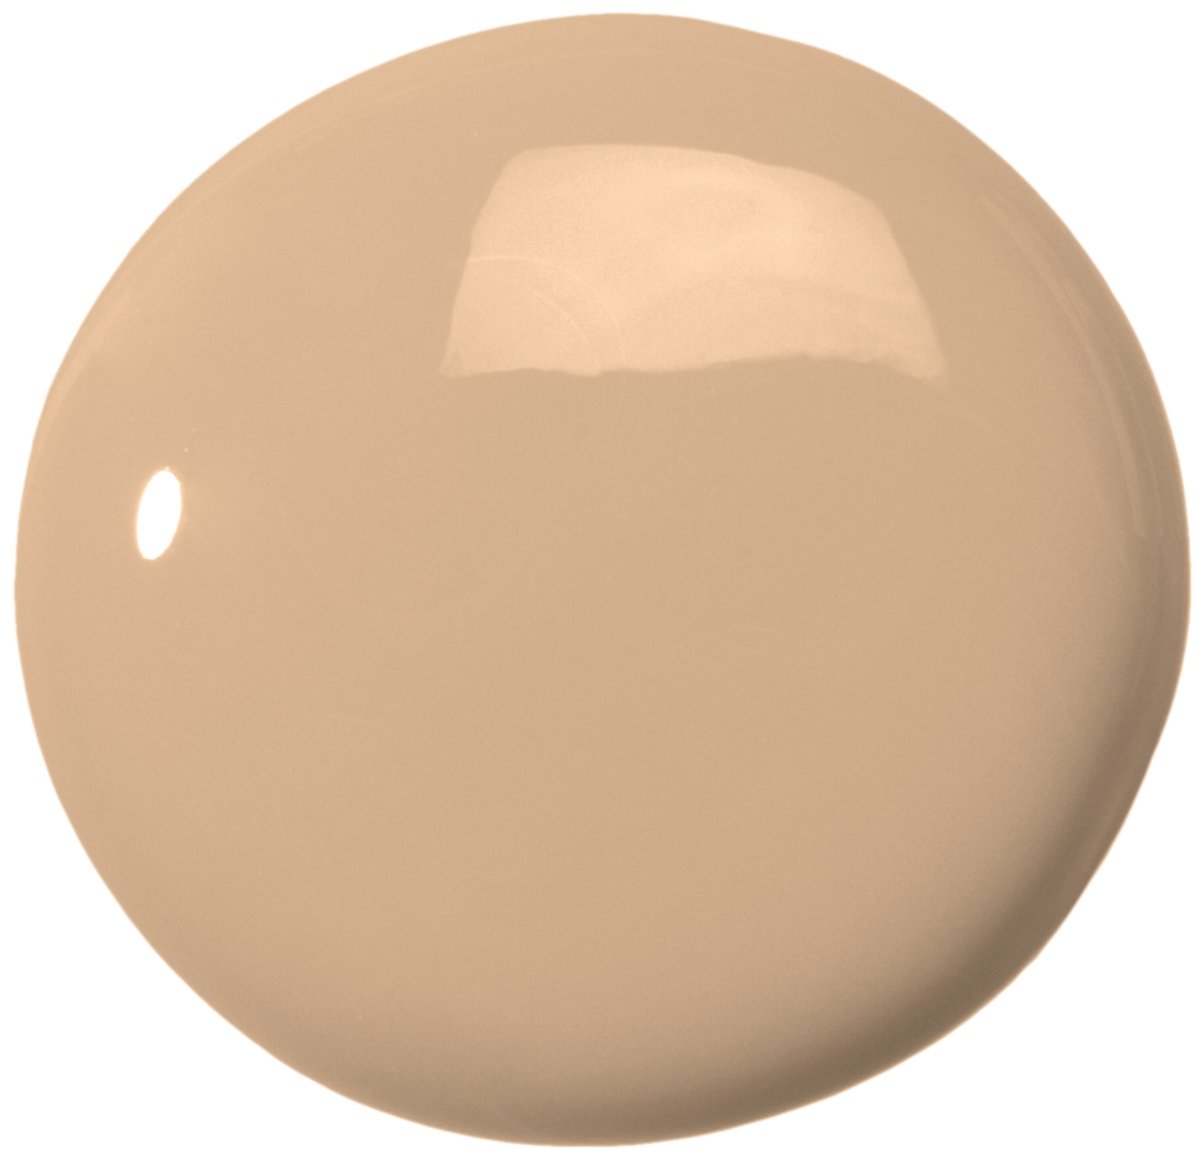 Jane Iredale Dream Tint Moisturizer, Medium Light 1.7 oz - image 2 of 8